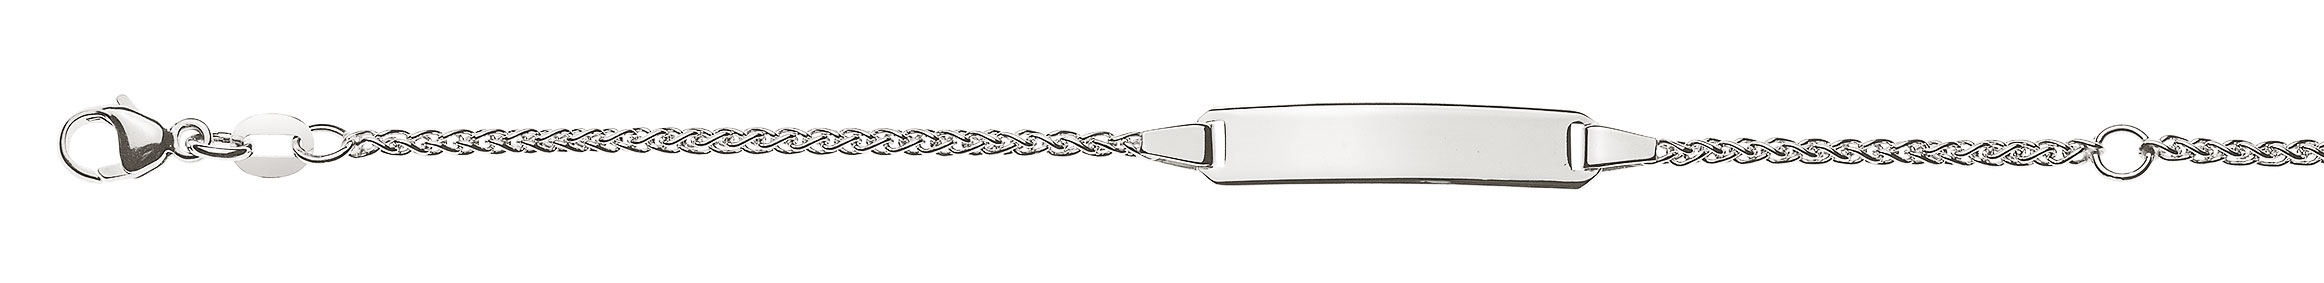 AURONOS Prestige ID-Bracelet 18k Weissgold Zopfkette 16cm